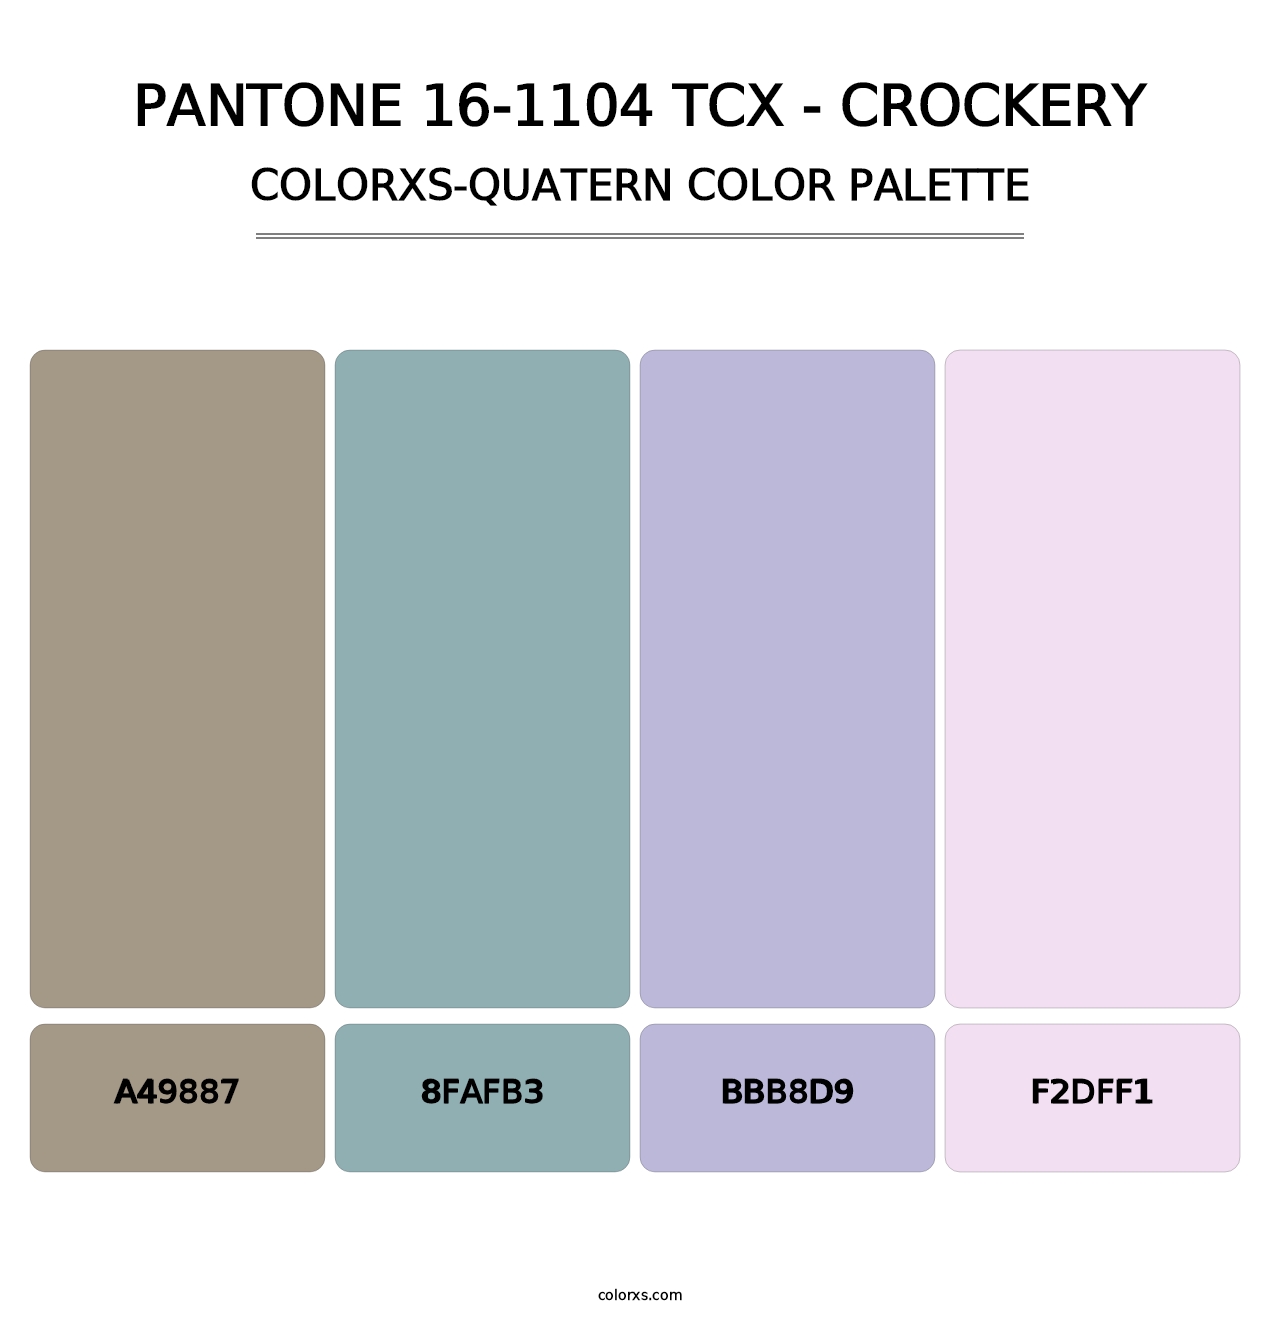 PANTONE 16-1104 TCX - Crockery - Colorxs Quatern Palette